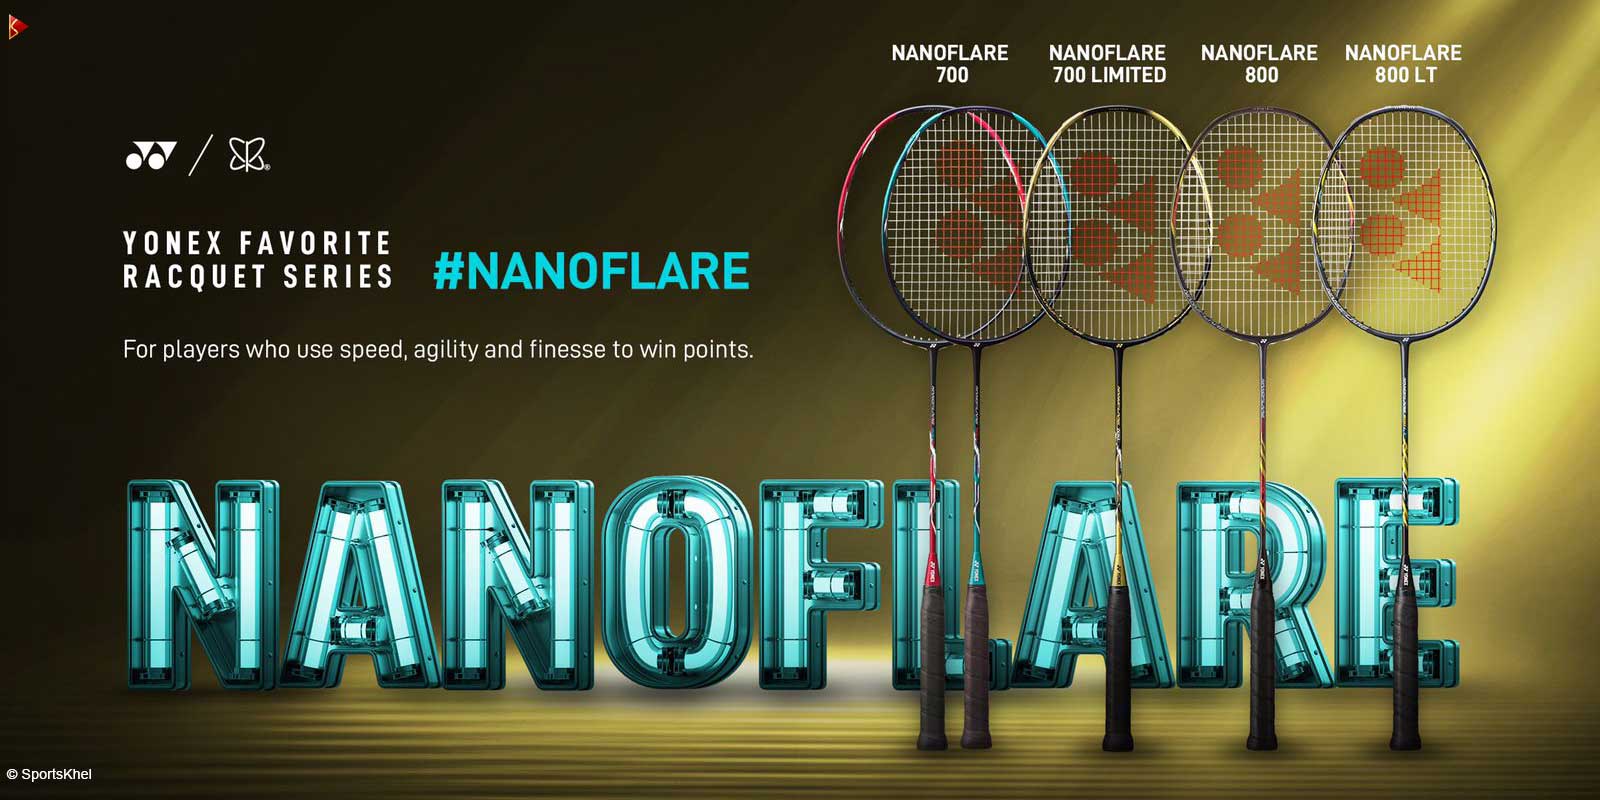 Yonex Nanoflare 700 Badminton Racket Features